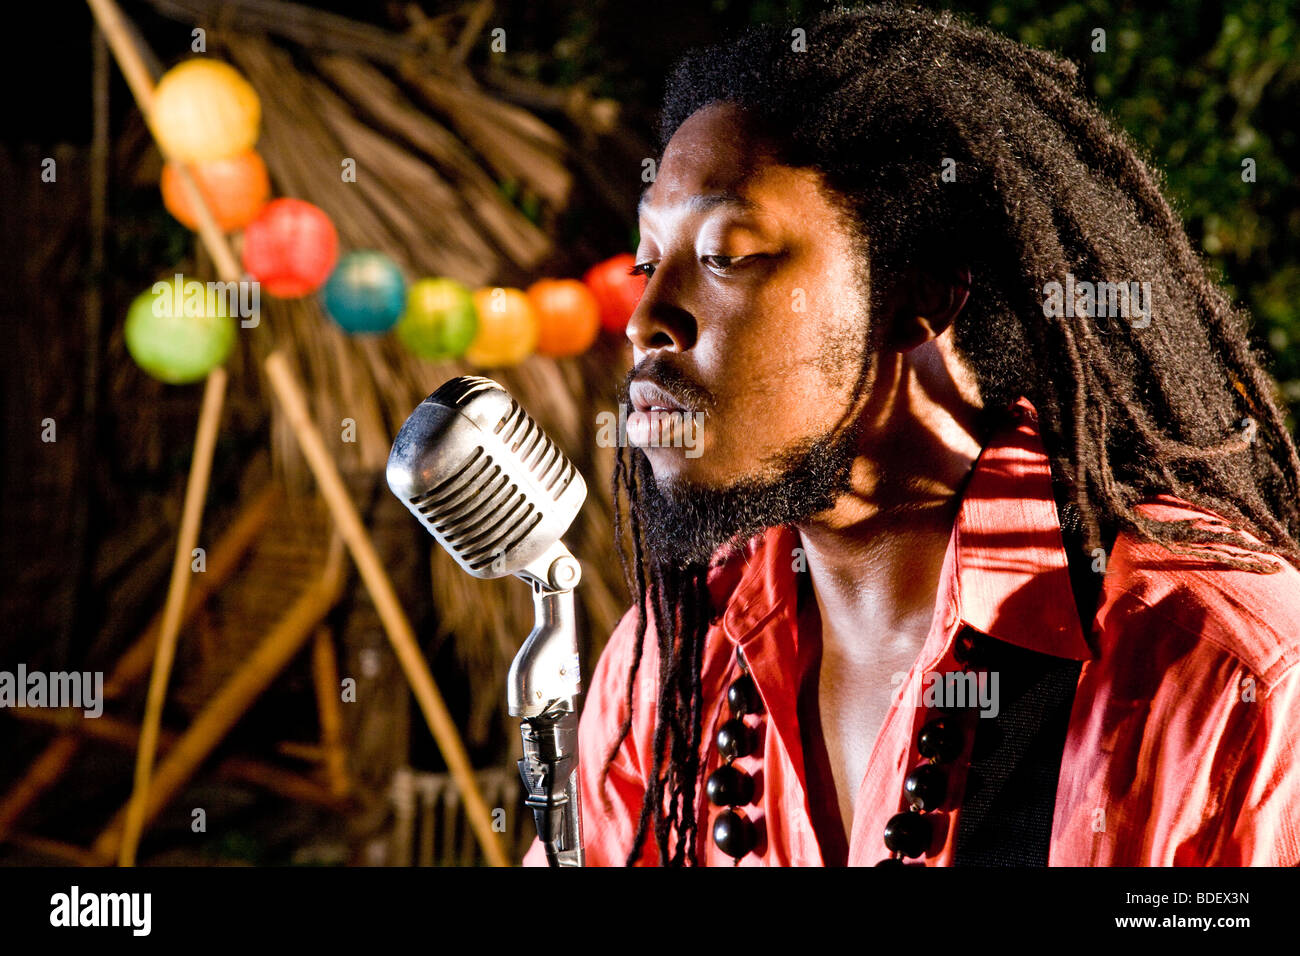 Joven hombre jamaiquino con dreadlocks cantando en isla tropical Foto de stock